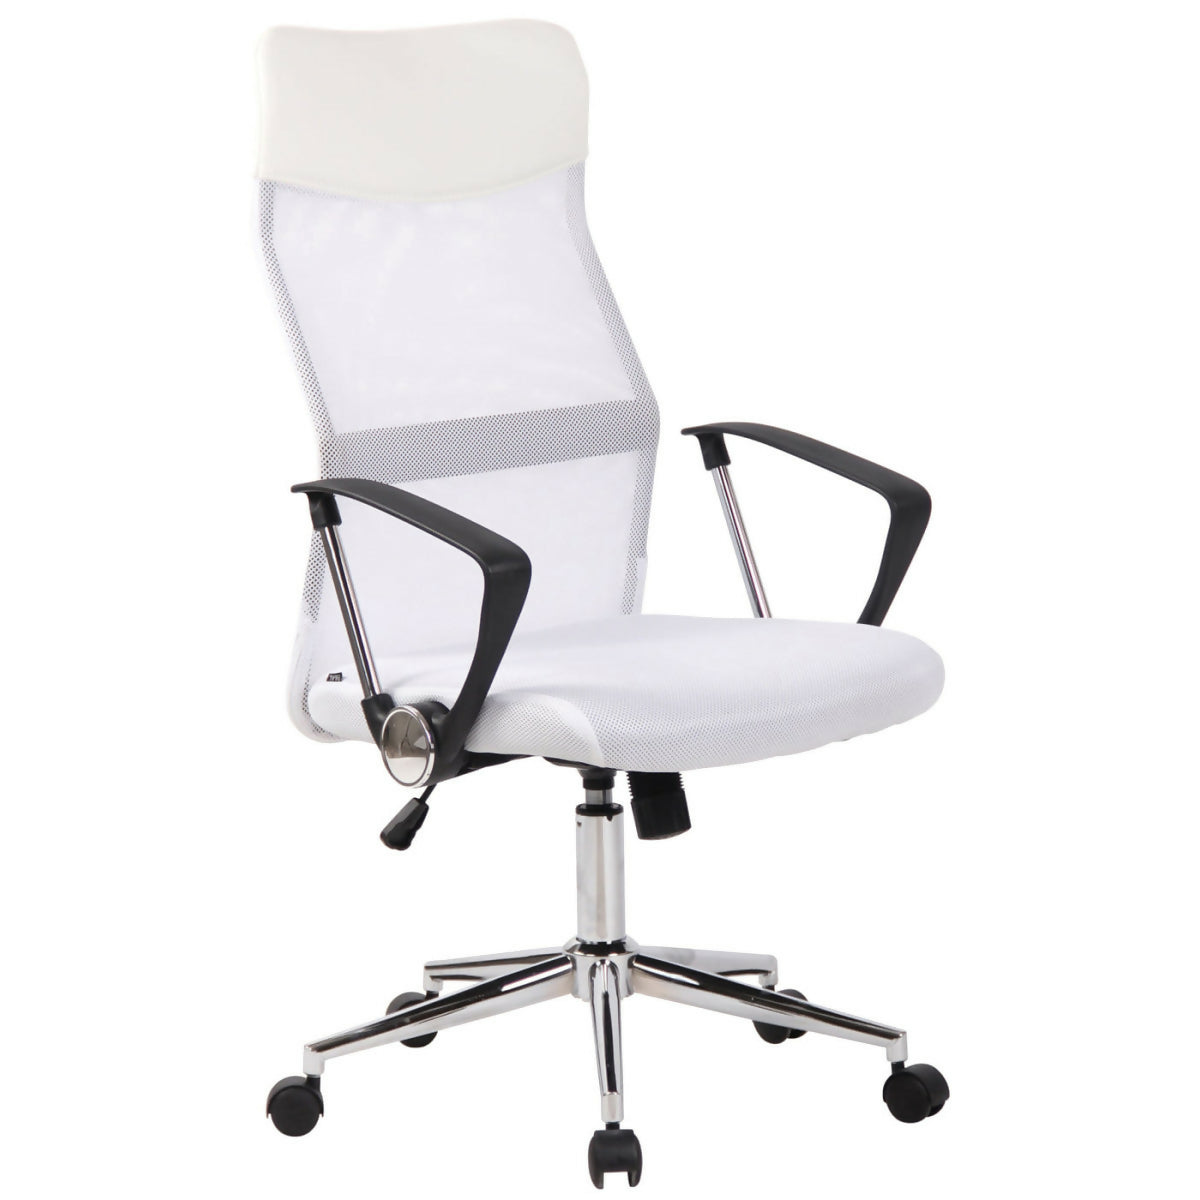 Korba office chair - White fabric